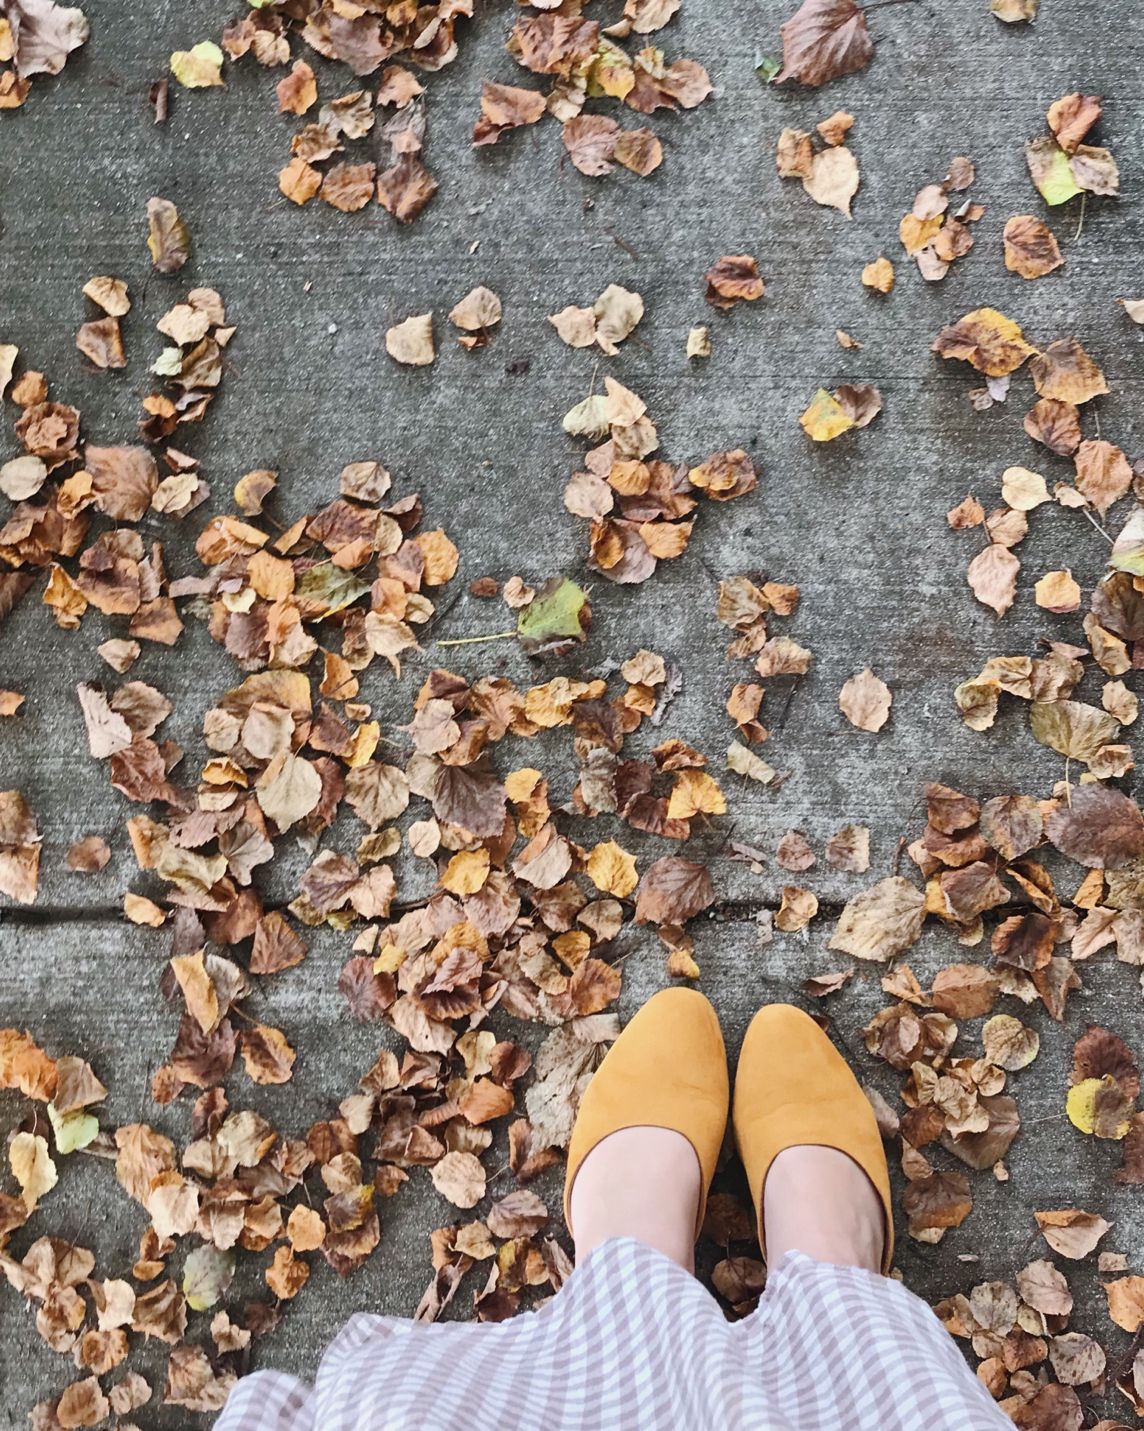 Molly Dressel on LinkedIn: Autumn has always been a season of renewal ...